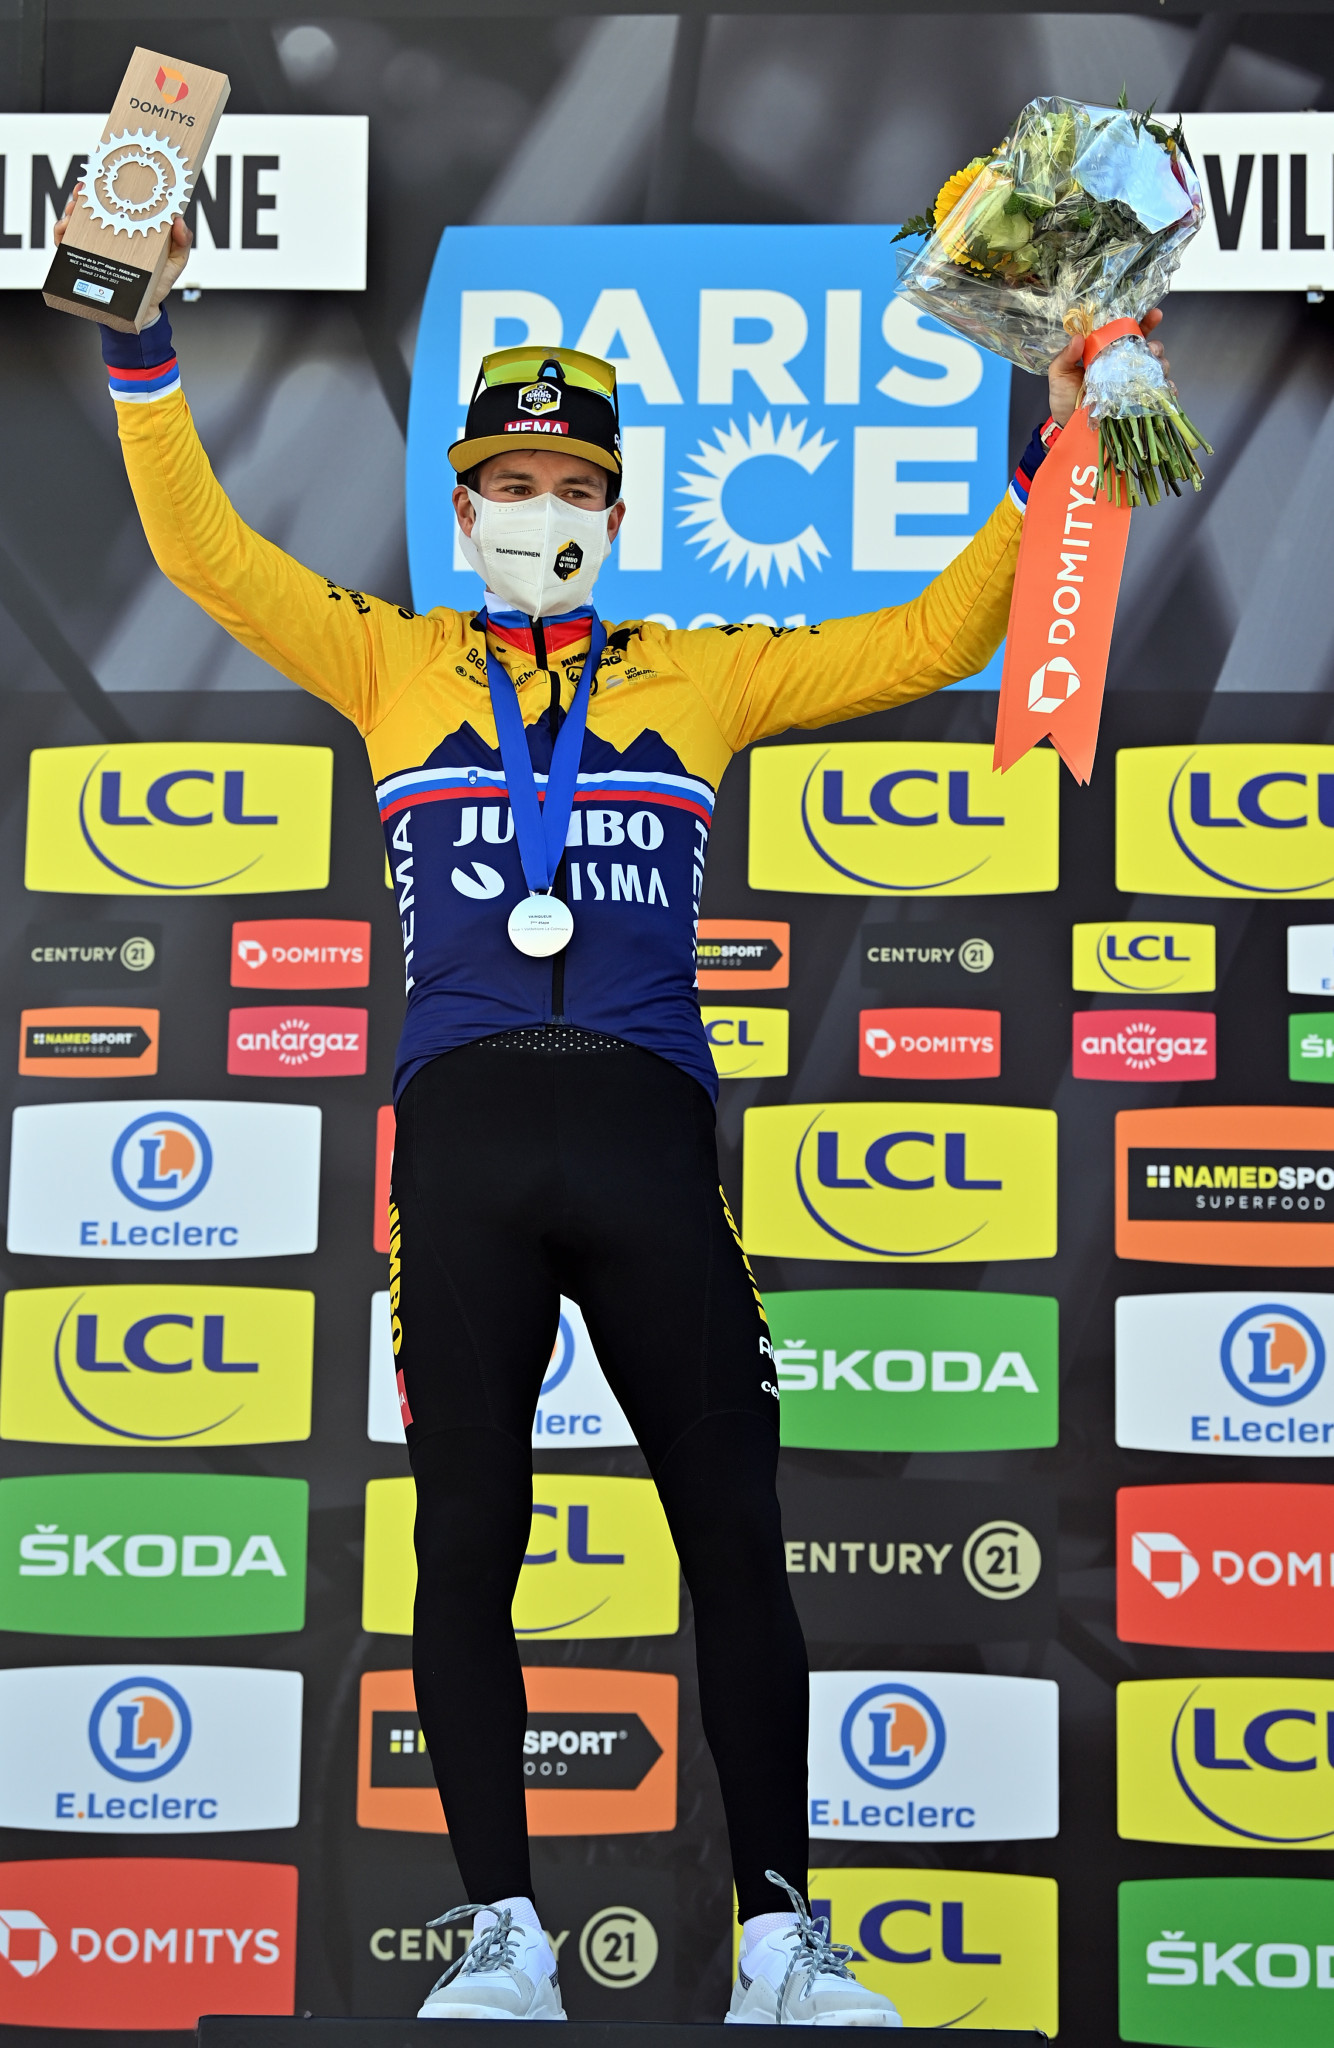 Roglič closes in on Paris-Nice crown after winning penultimate stage